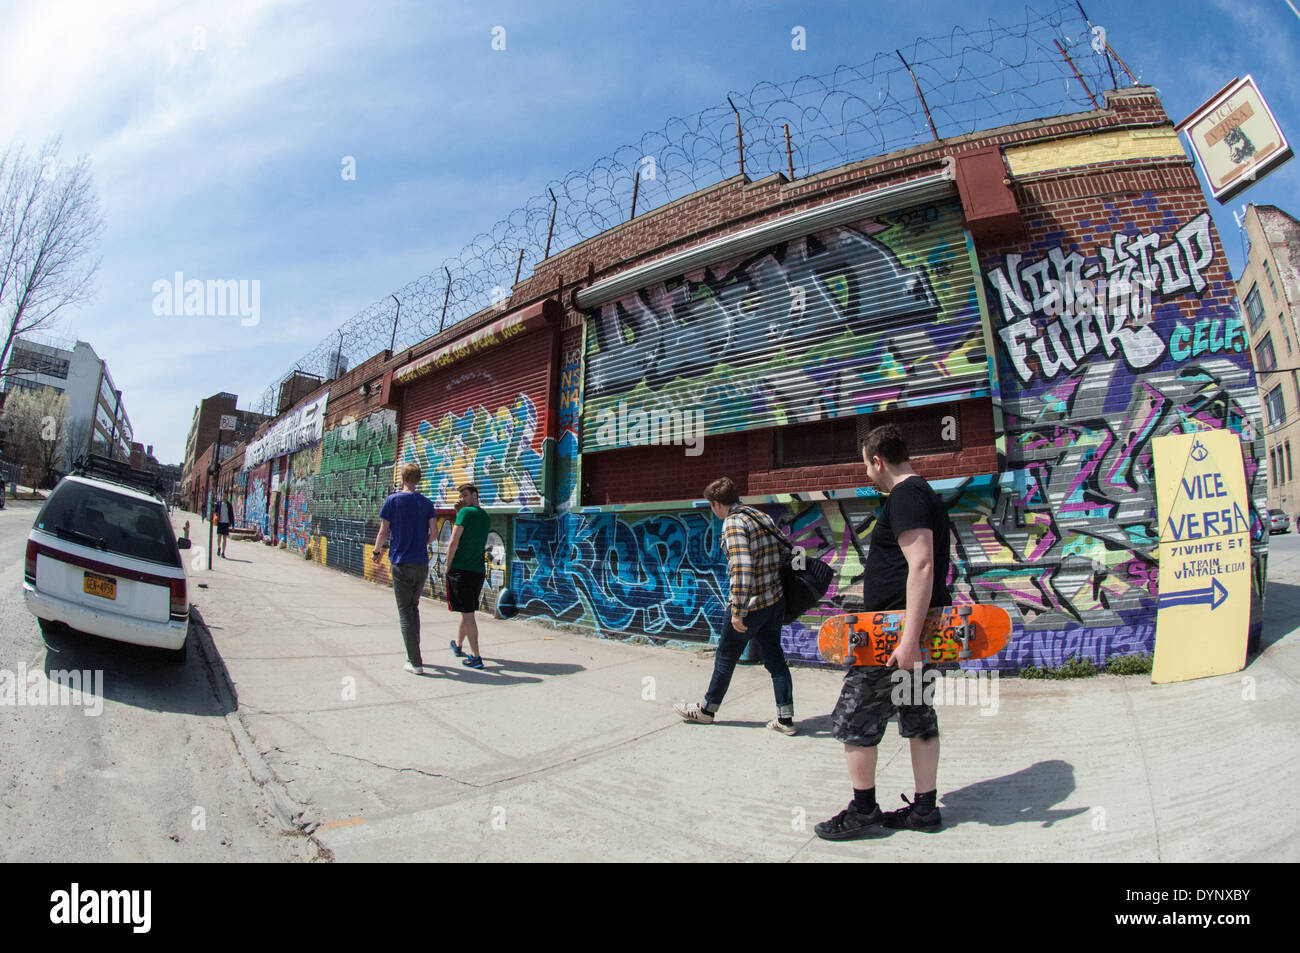 A mural seen in the Bushwick neighborhood of Brooklyn in New York Stock Photo